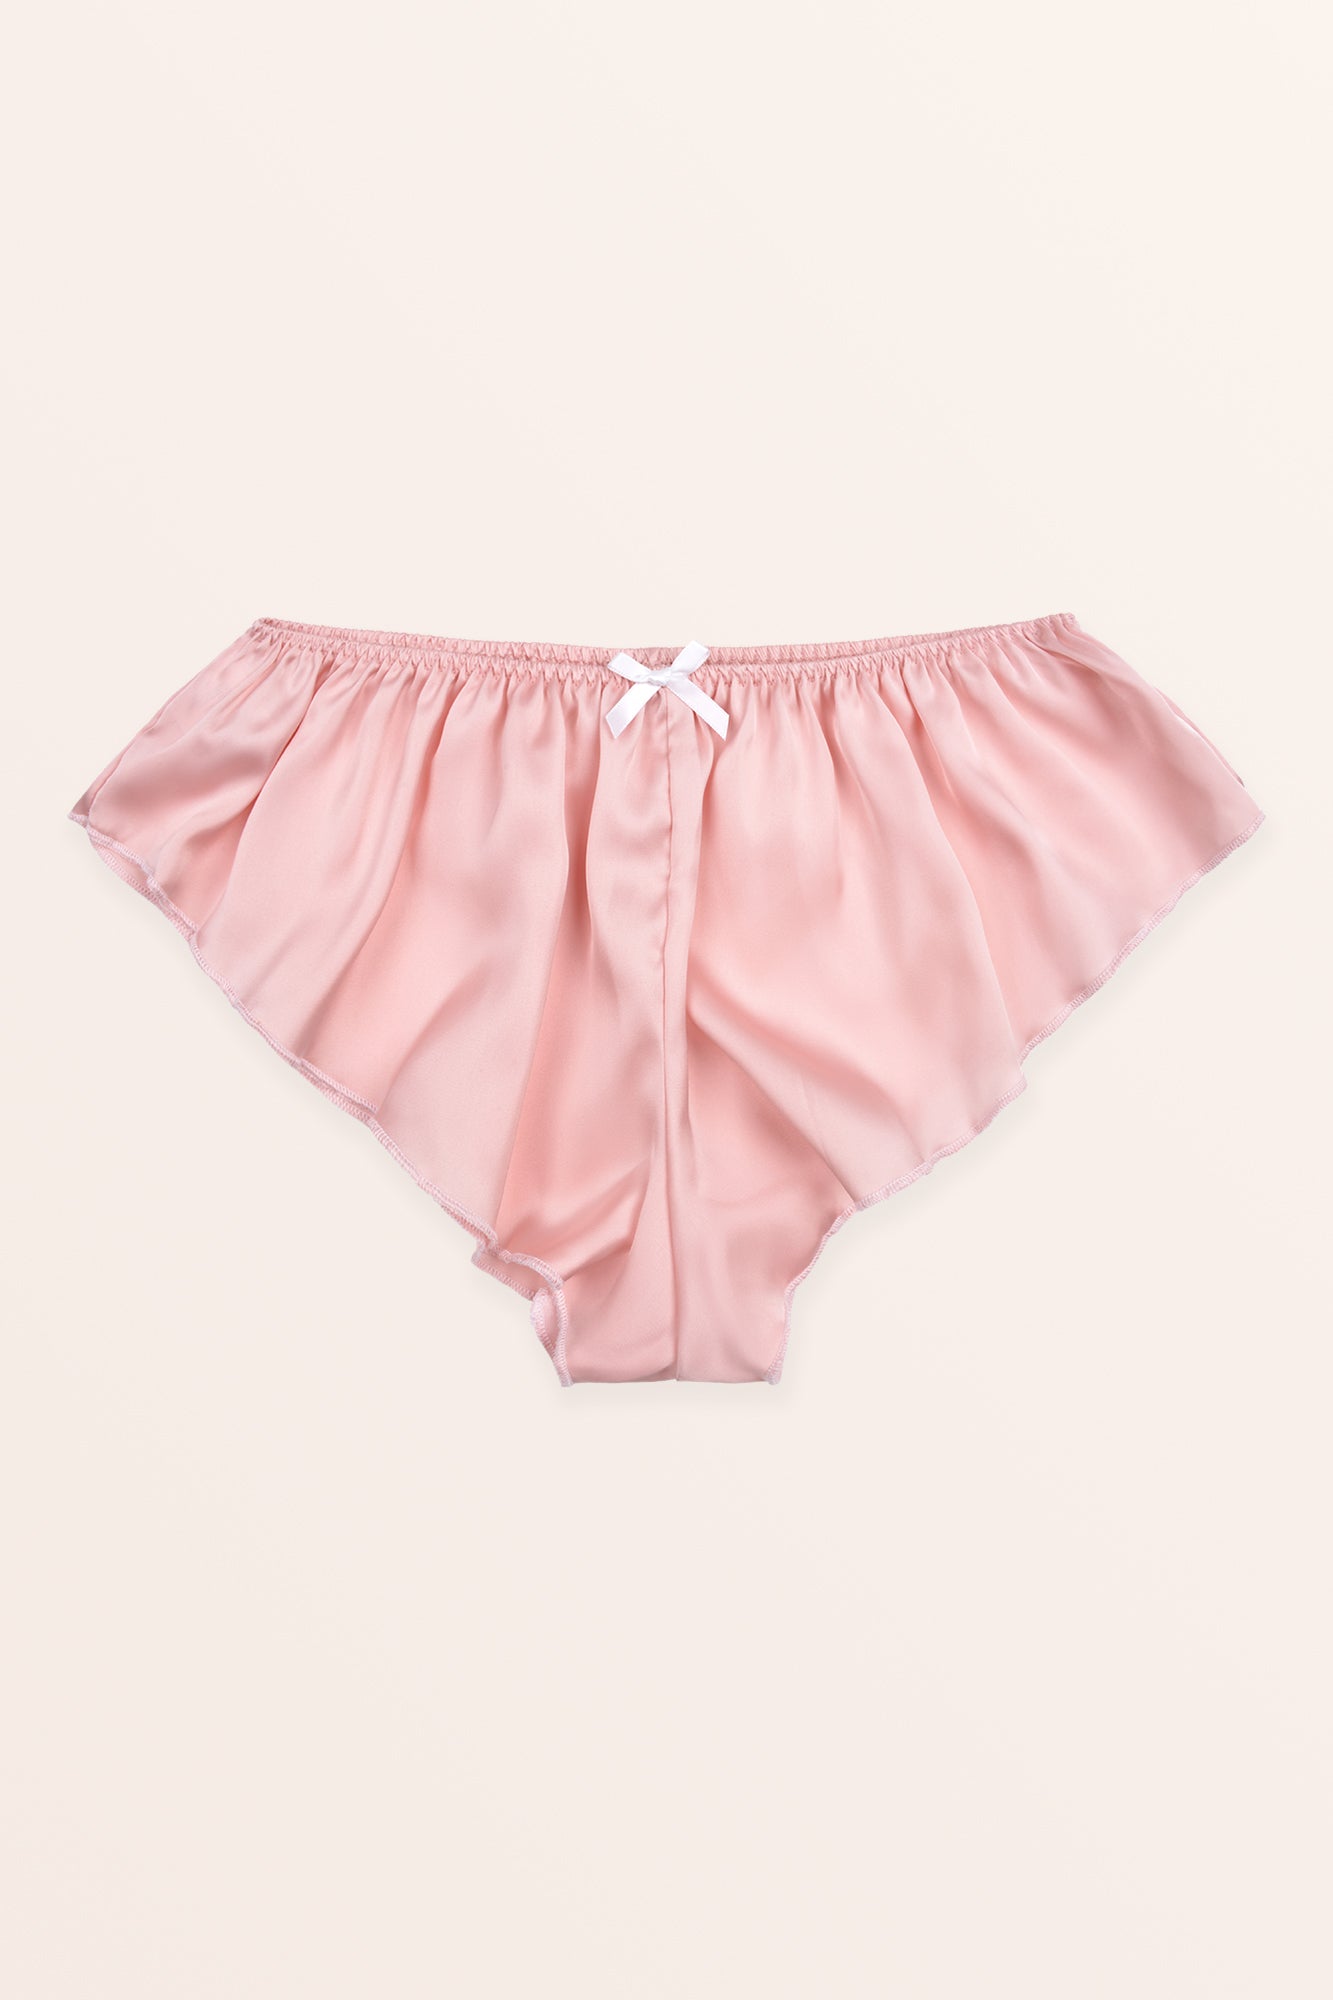 Satini Women's Nylon Sheer French Knickers Briefs Panties (Baby